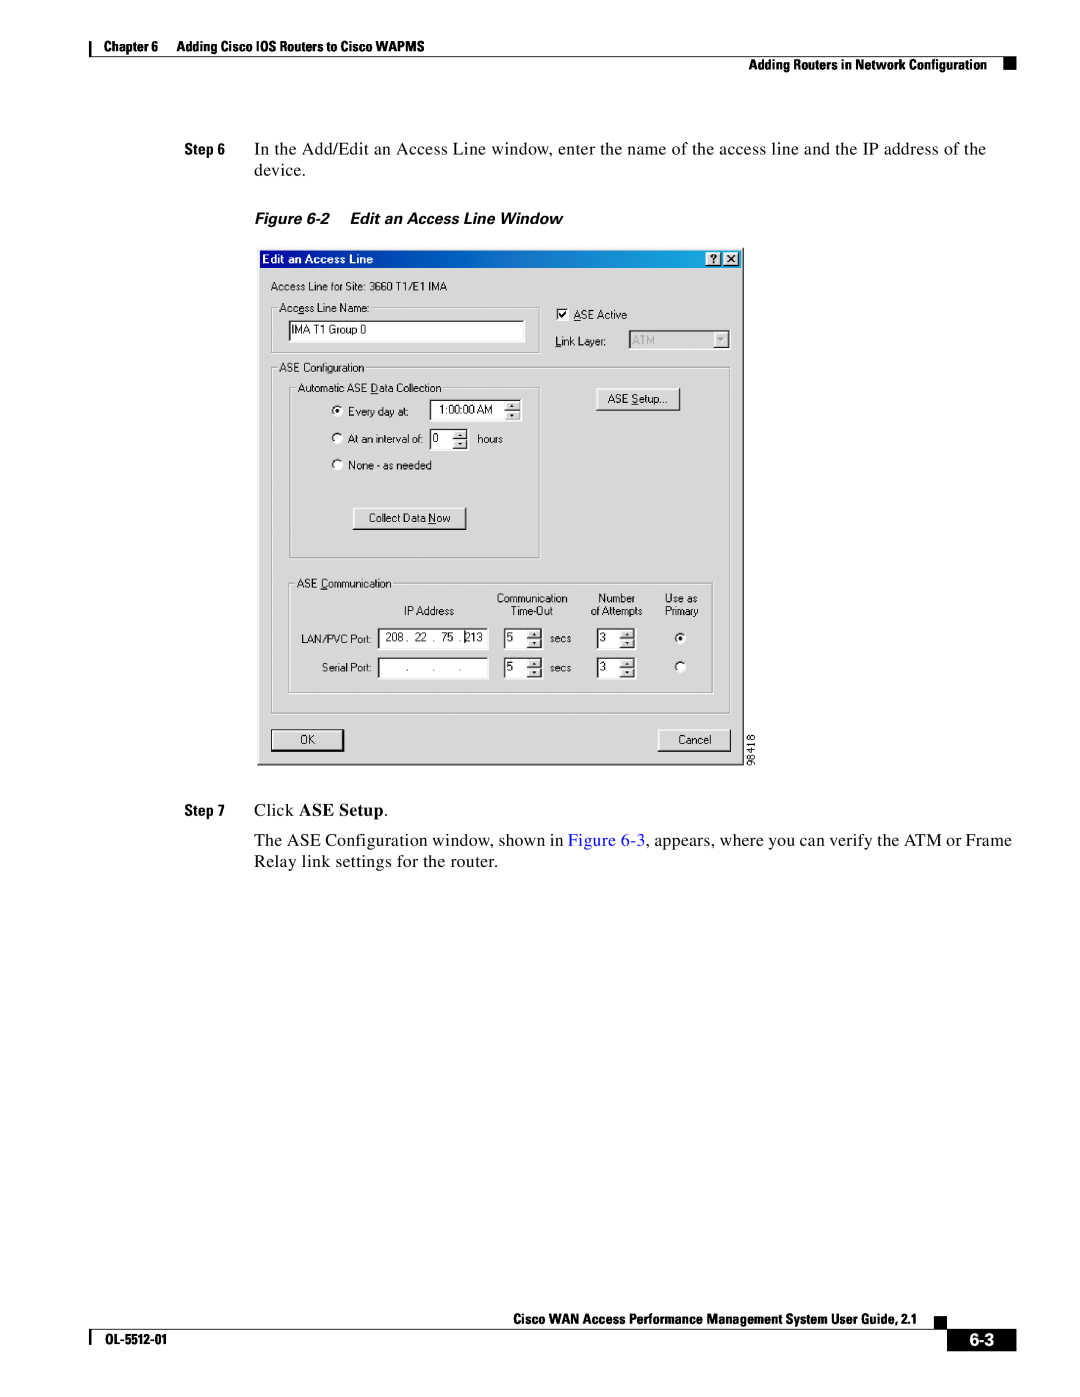 Cisco Systems OL-5512-01 manual Click ASE Setup, 2 Edit an Access Line Window 